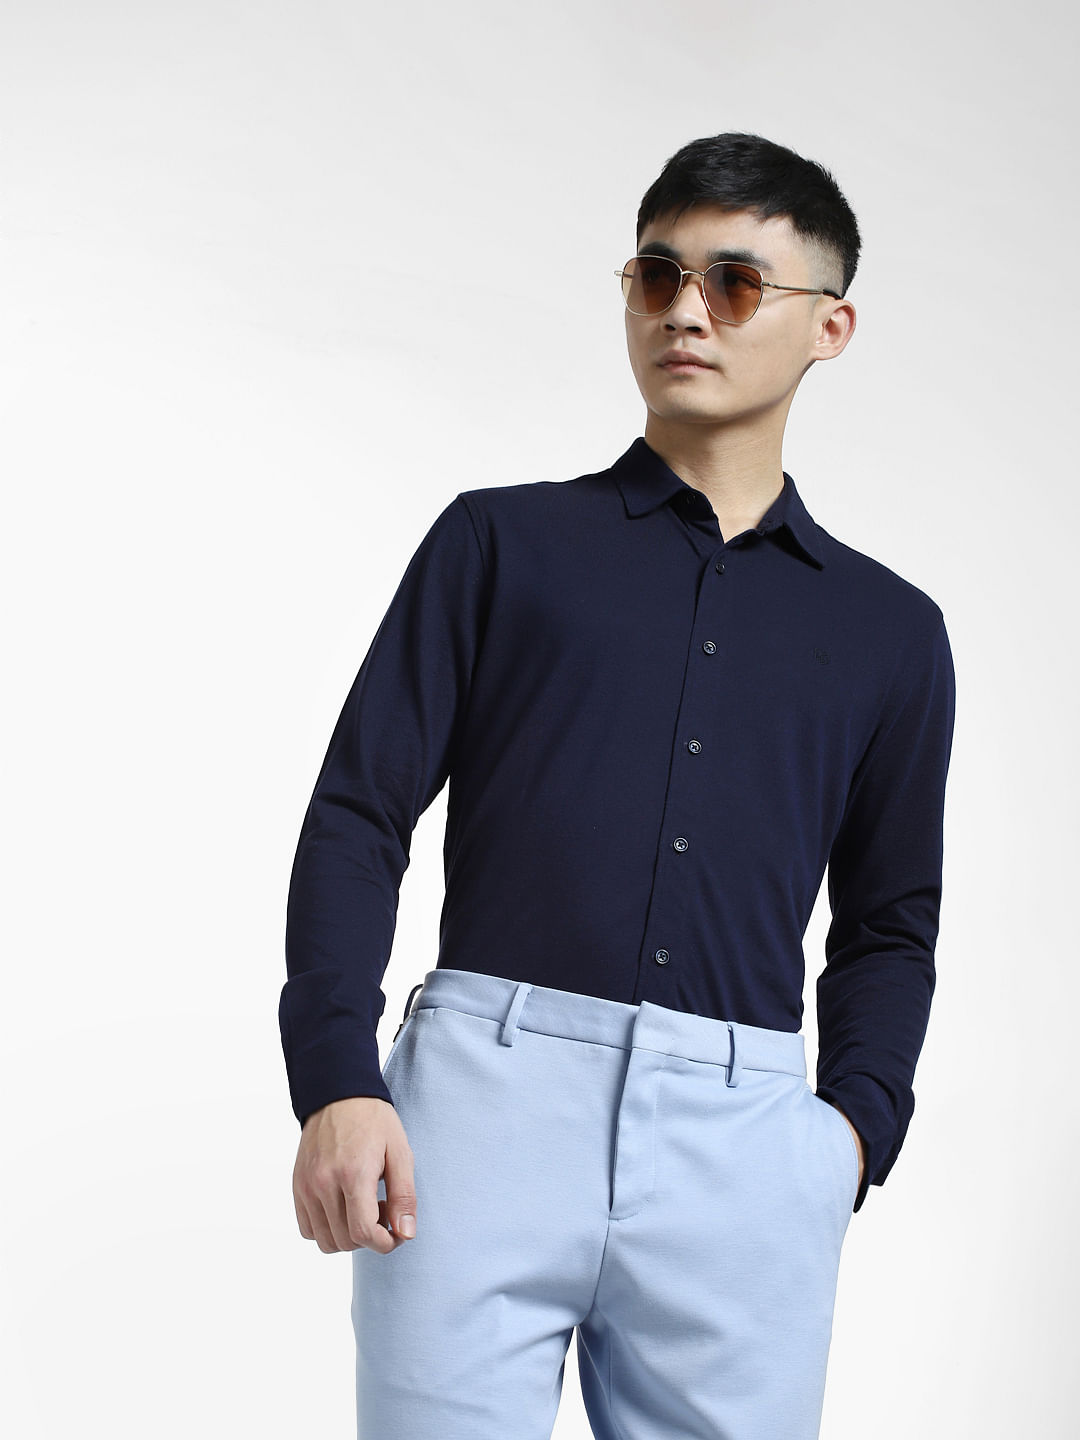 Pin by Ola Classe! on Men Fashion | Dark blue dress shirt, Light blue dress  shirt, Light blue shirts